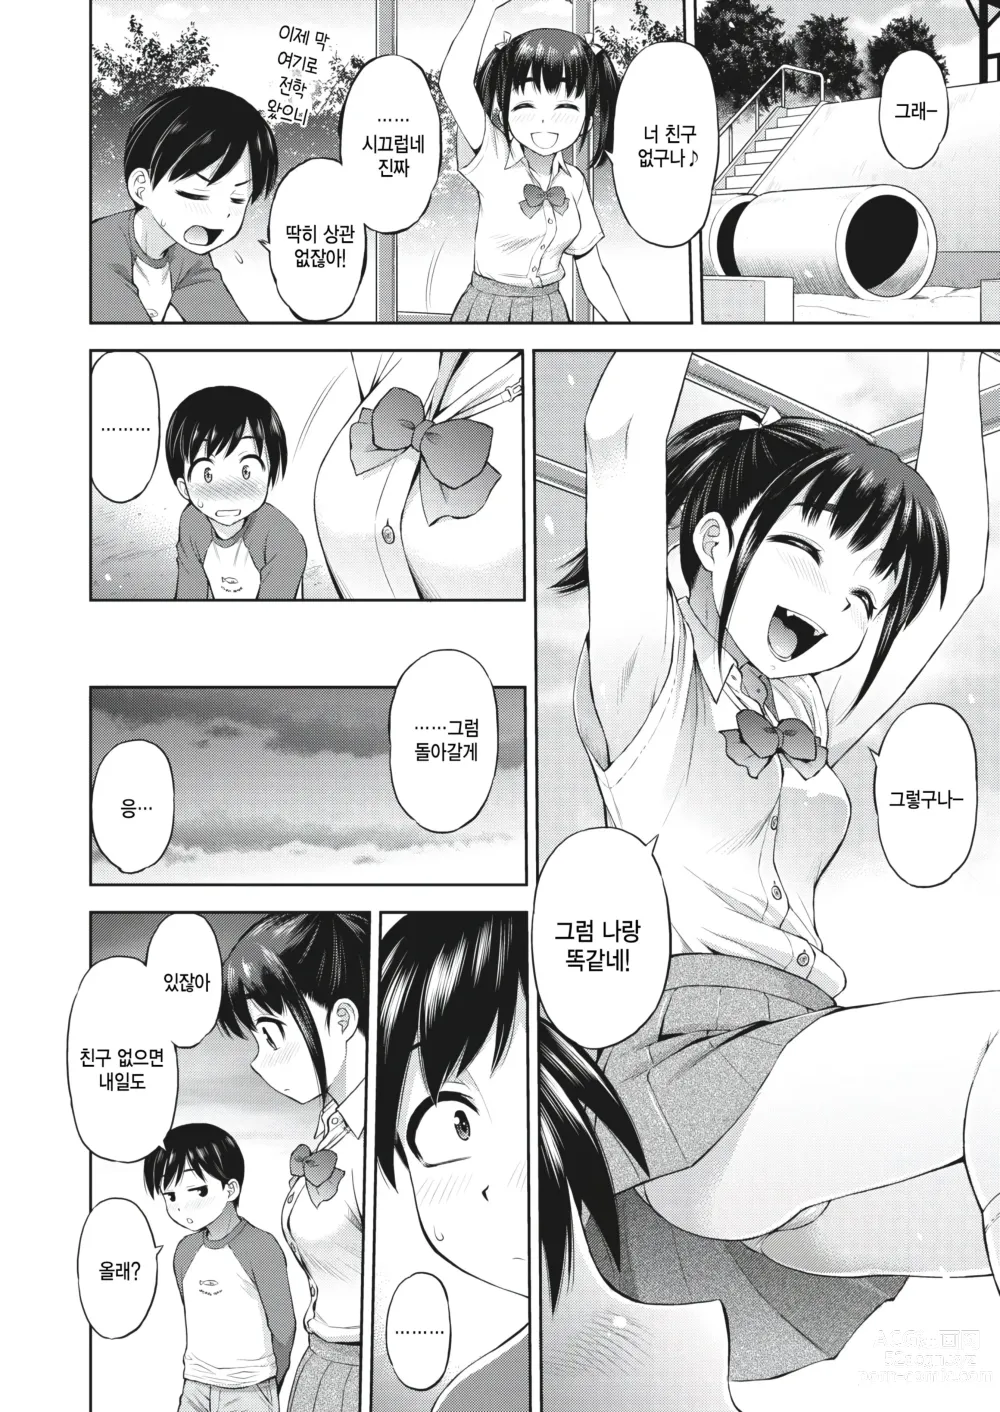 Page 2 of manga Kanojo to Ore no Jikan